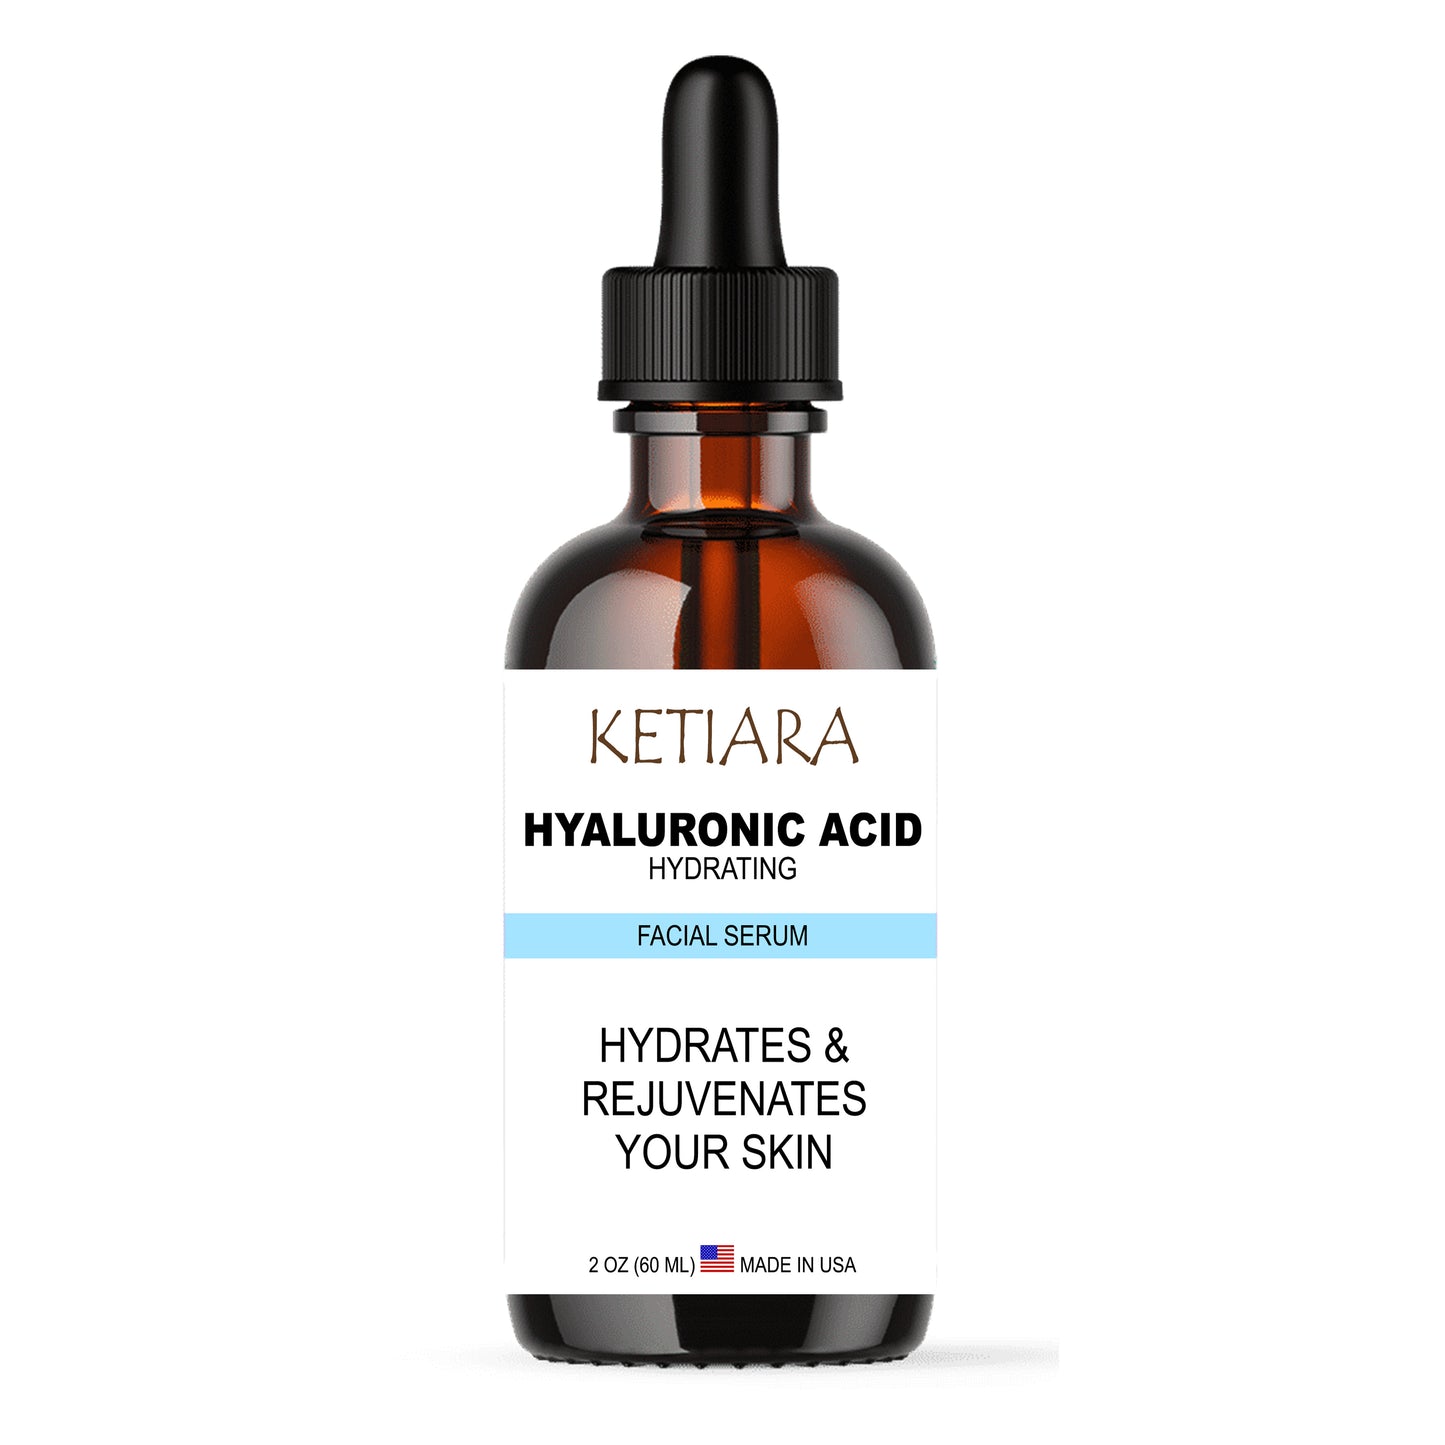 Ketiara Hyaluronic Acid Face Serum, to Hydrate, Visibly Plump Skin, & Reduce Wrinkles, Fragrance Free, 2 Fl Oz